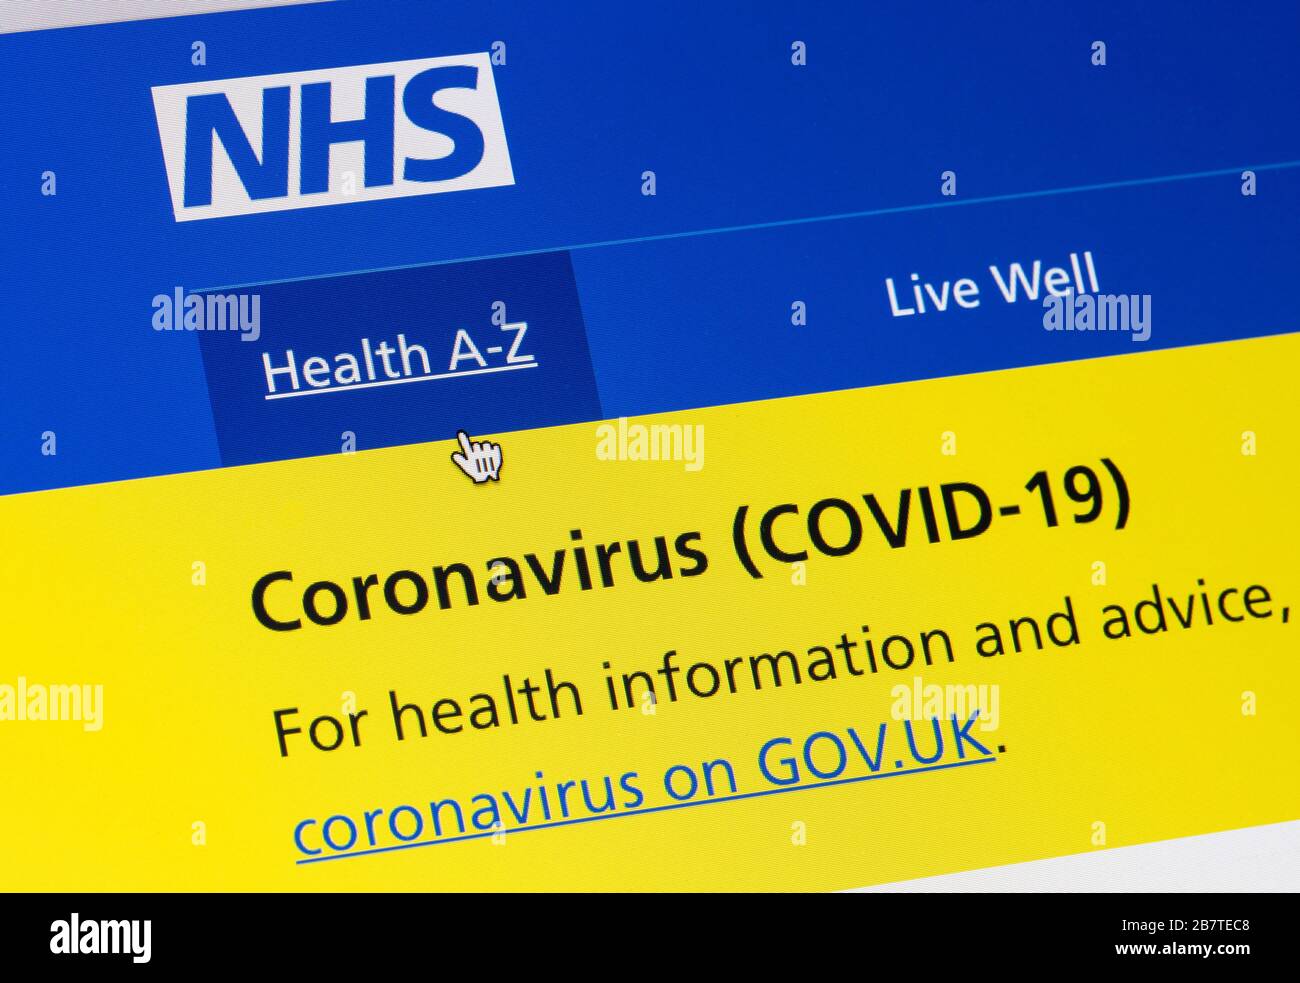 NHS website Coronavirus Covid 19 website Stock Photo